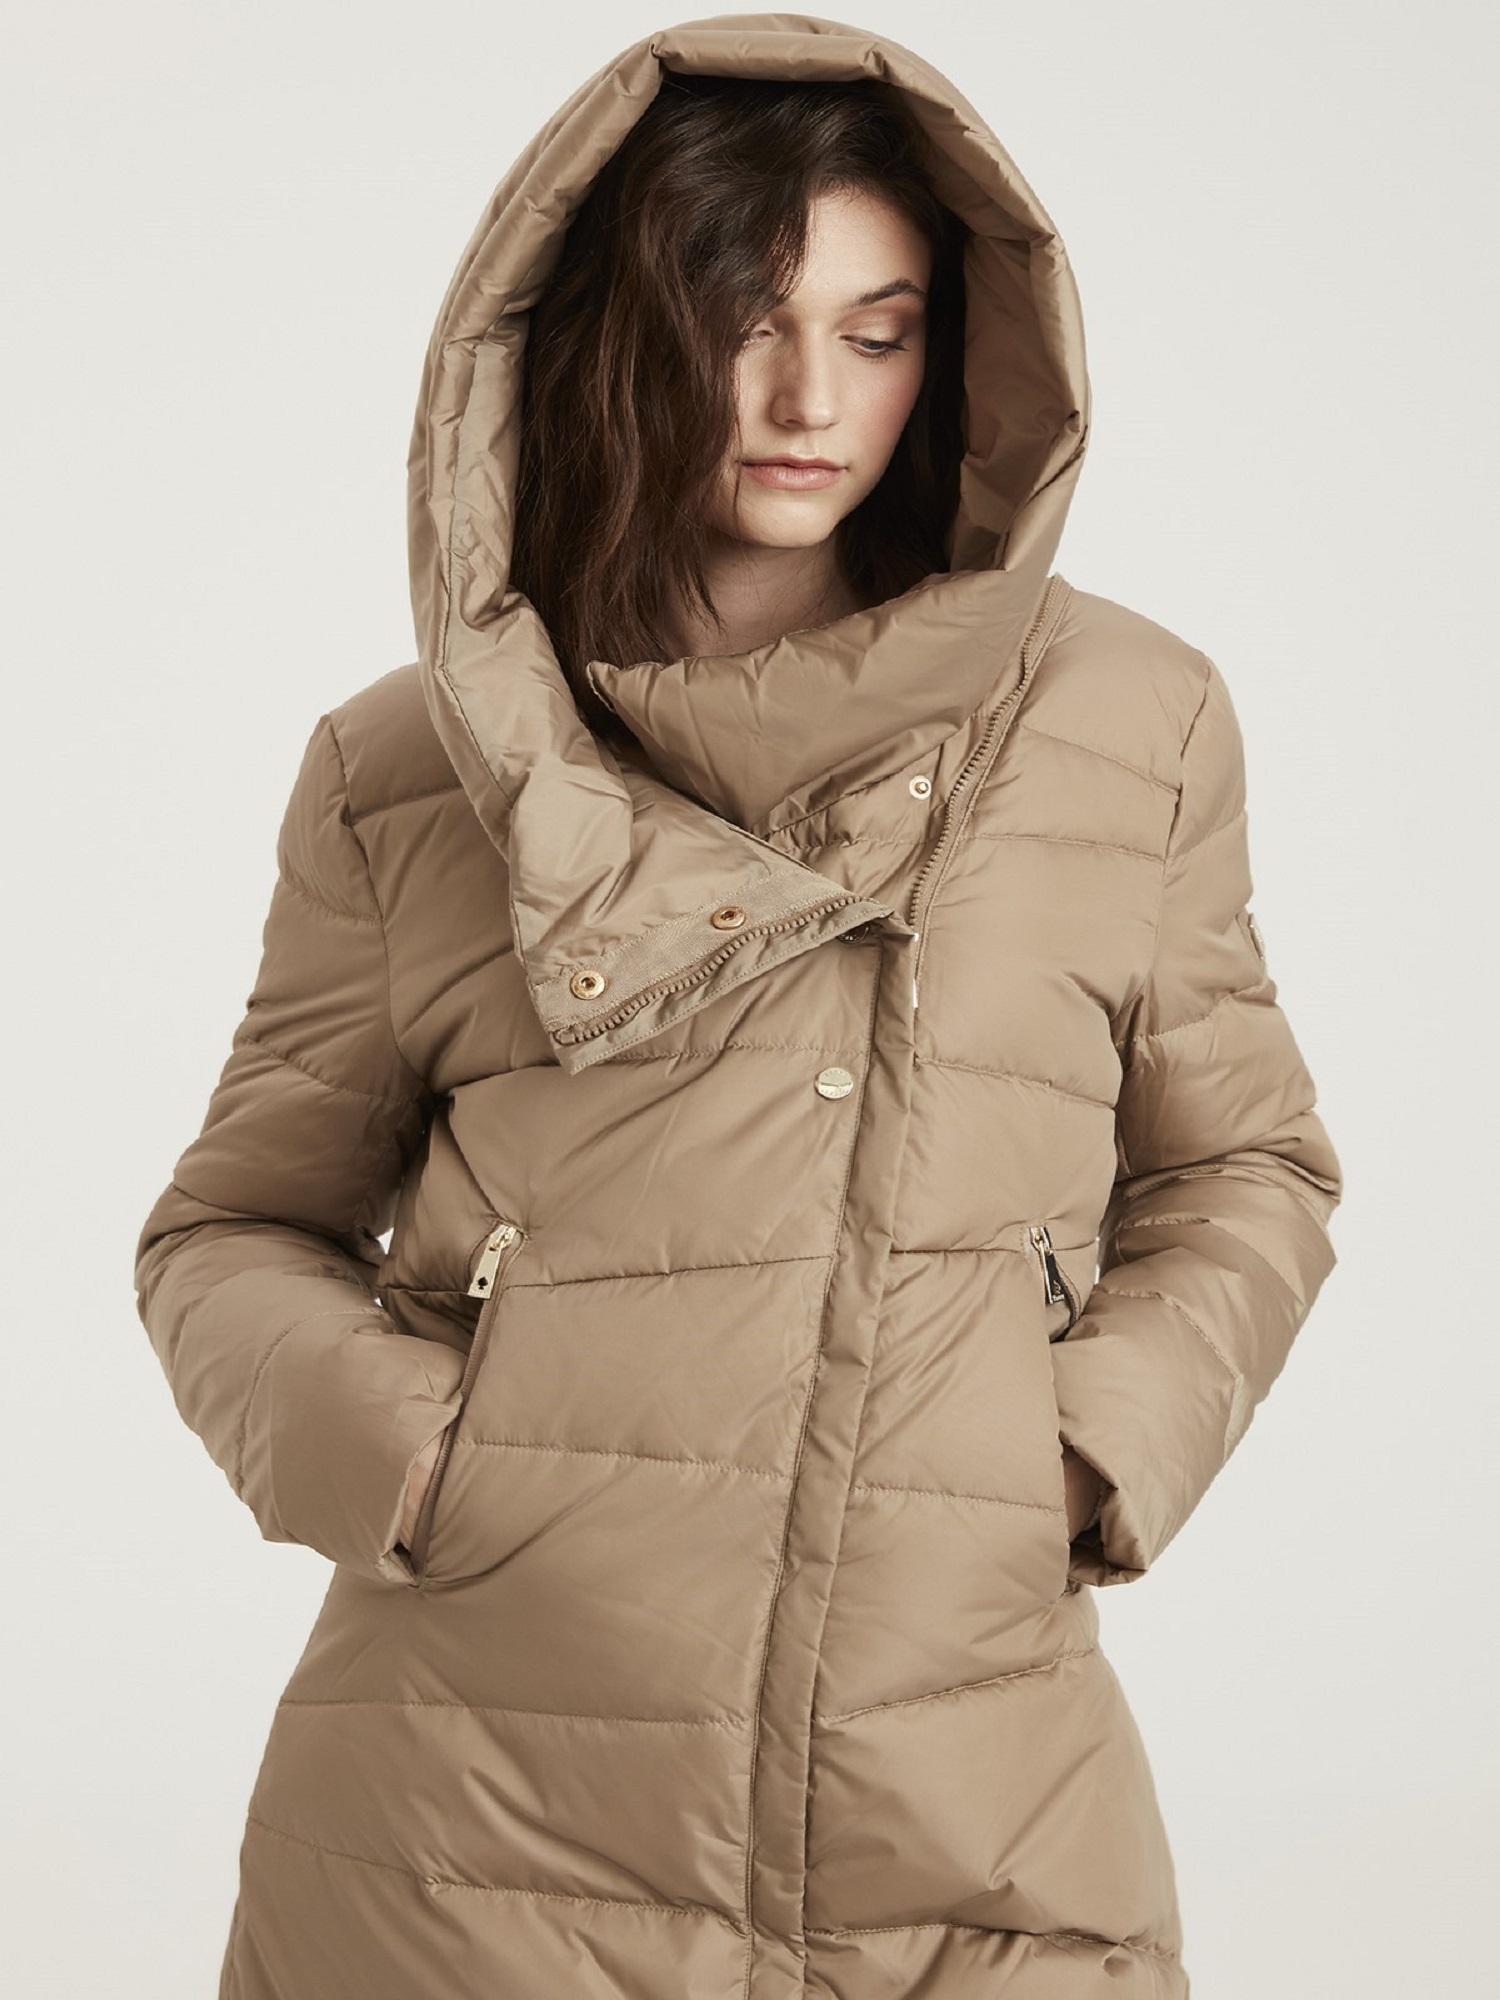 Beige winter jacket hooded coat Tiffi